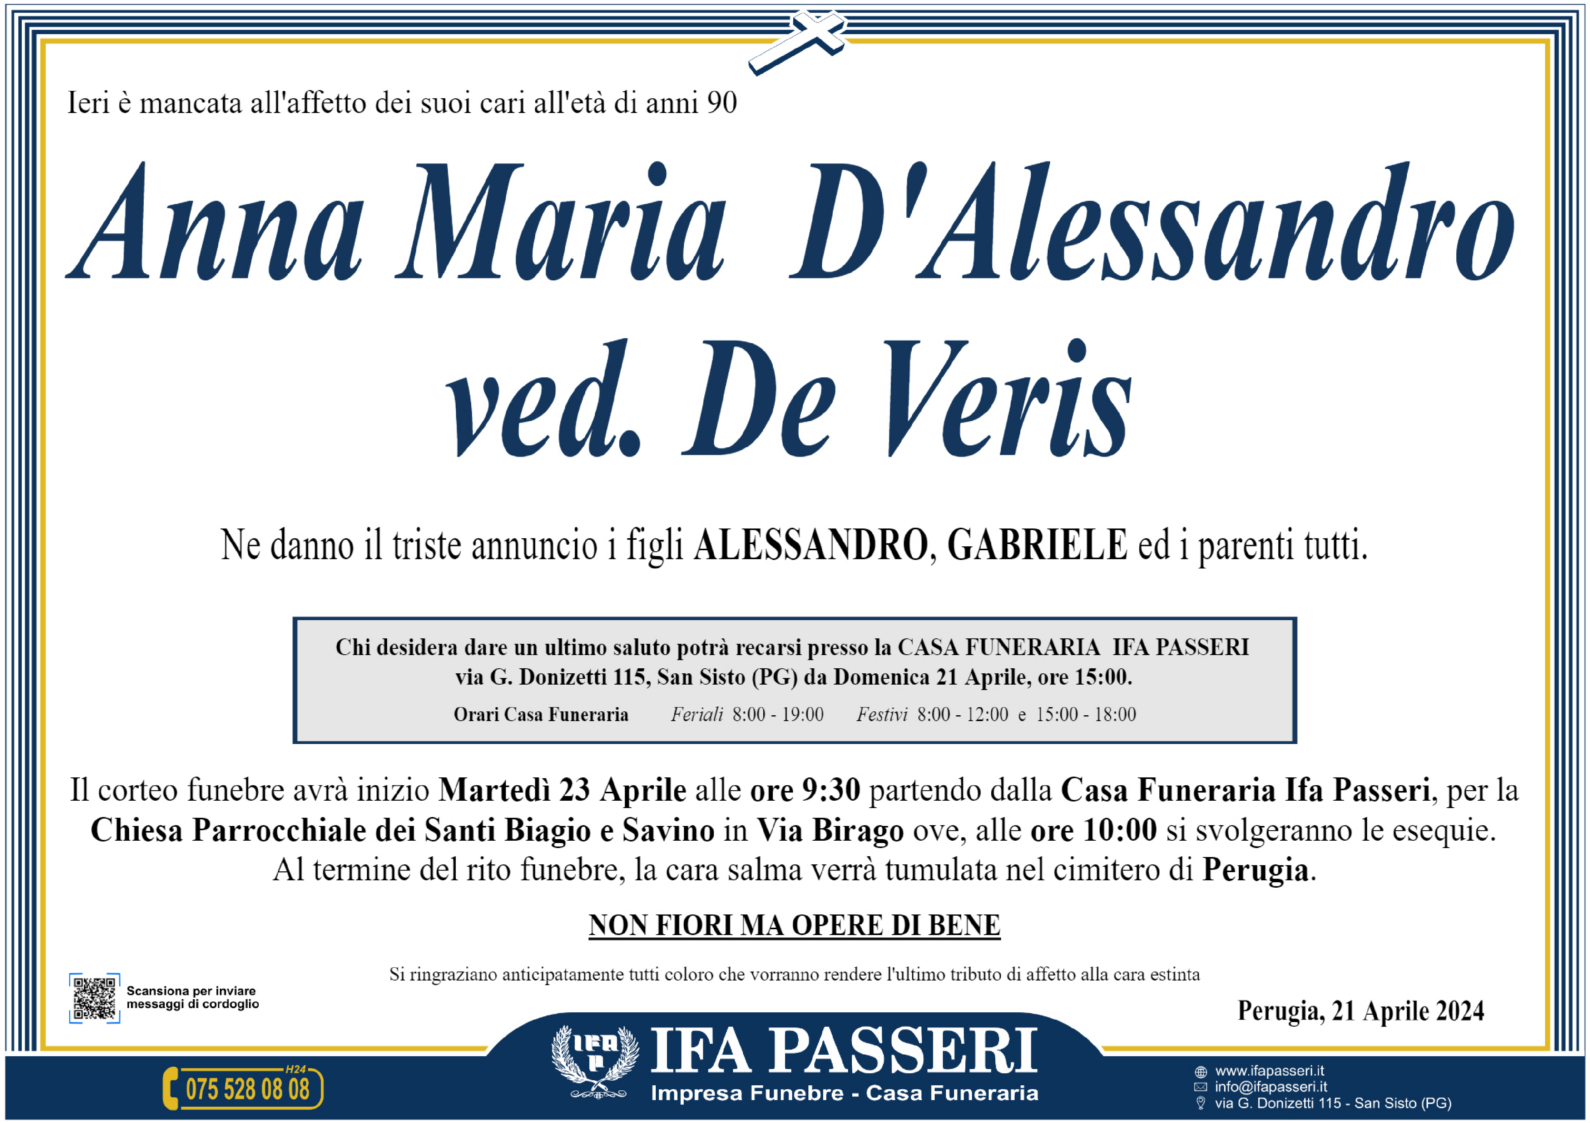 Anna Maria D’Alessandro ved. De Veris